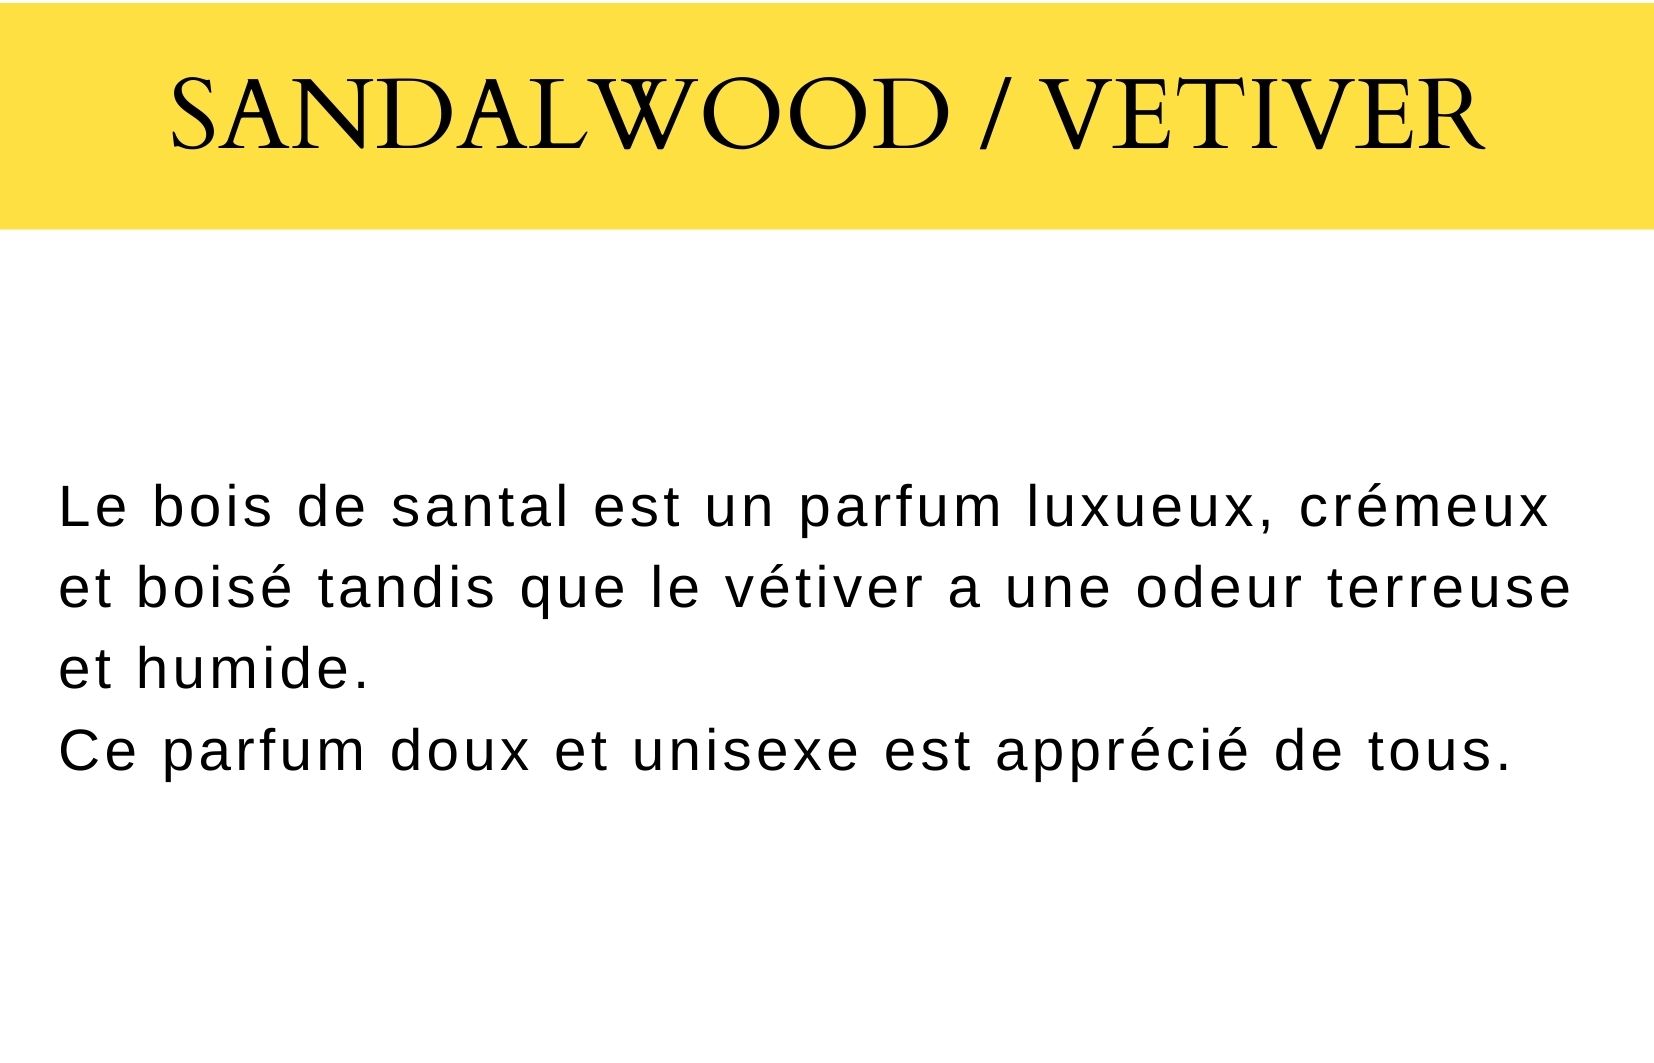 Sandalwood et vetiver description fragrance